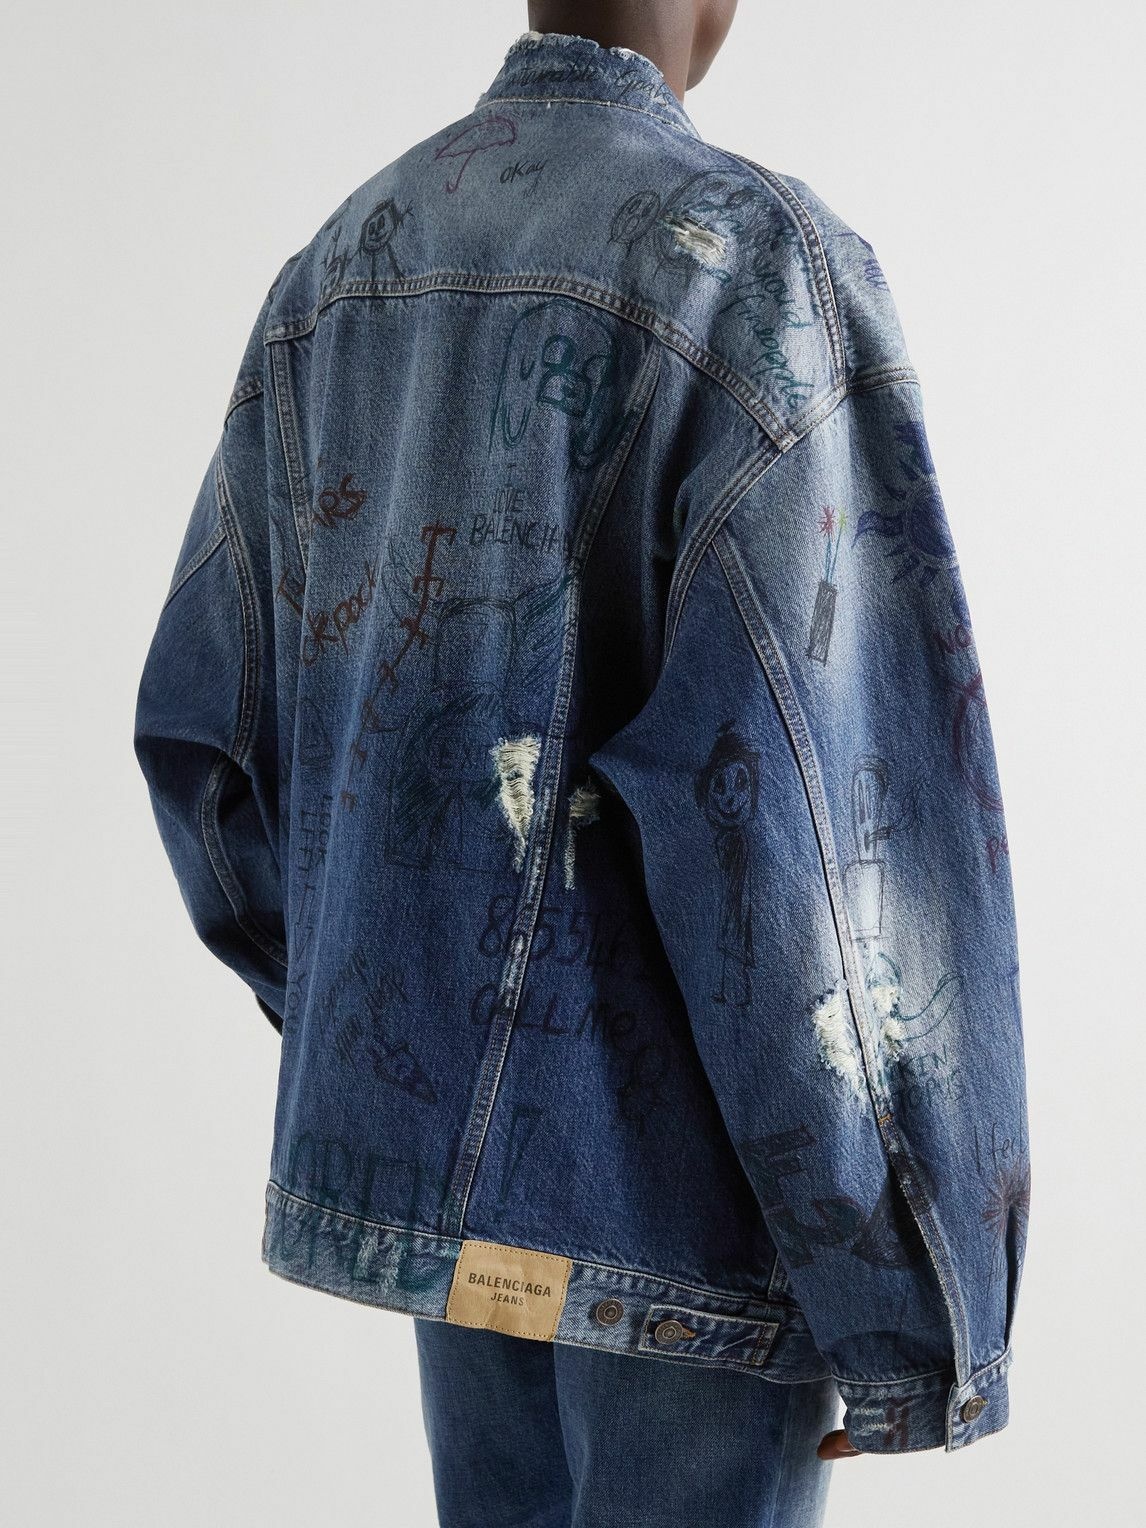 Balenciaga - Oversized Printed Distressed Denim Jacket - Blue Balenciaga